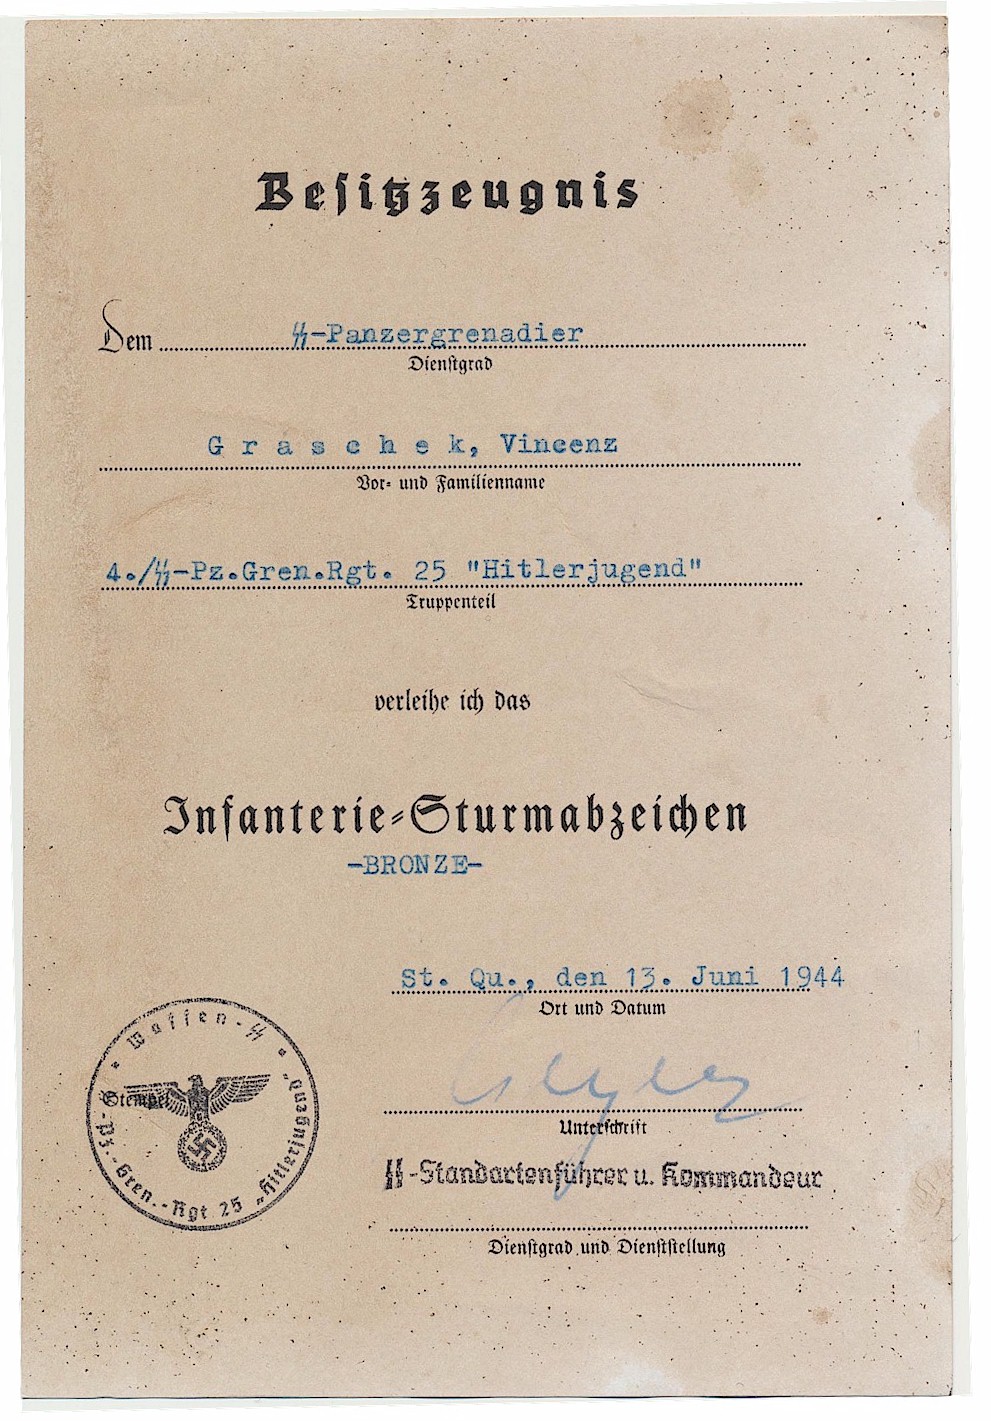 GERMAN WW2 INFANTRY ASSAULT BADGE AWARD DOCUMENT FOR VINCENZ GRASCHEK